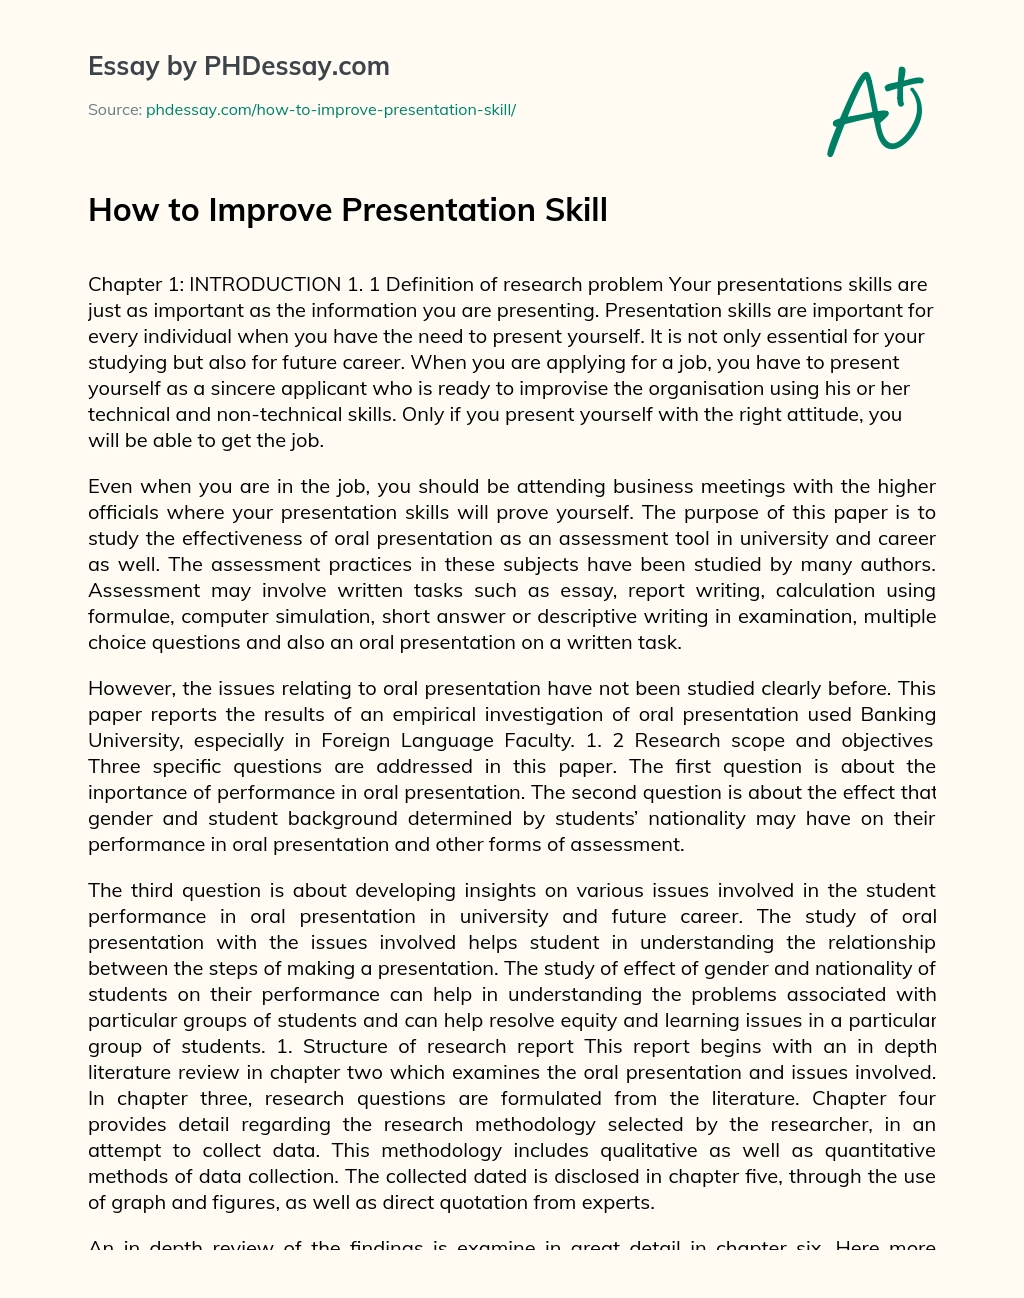 How to Improve Presentation Skill essay